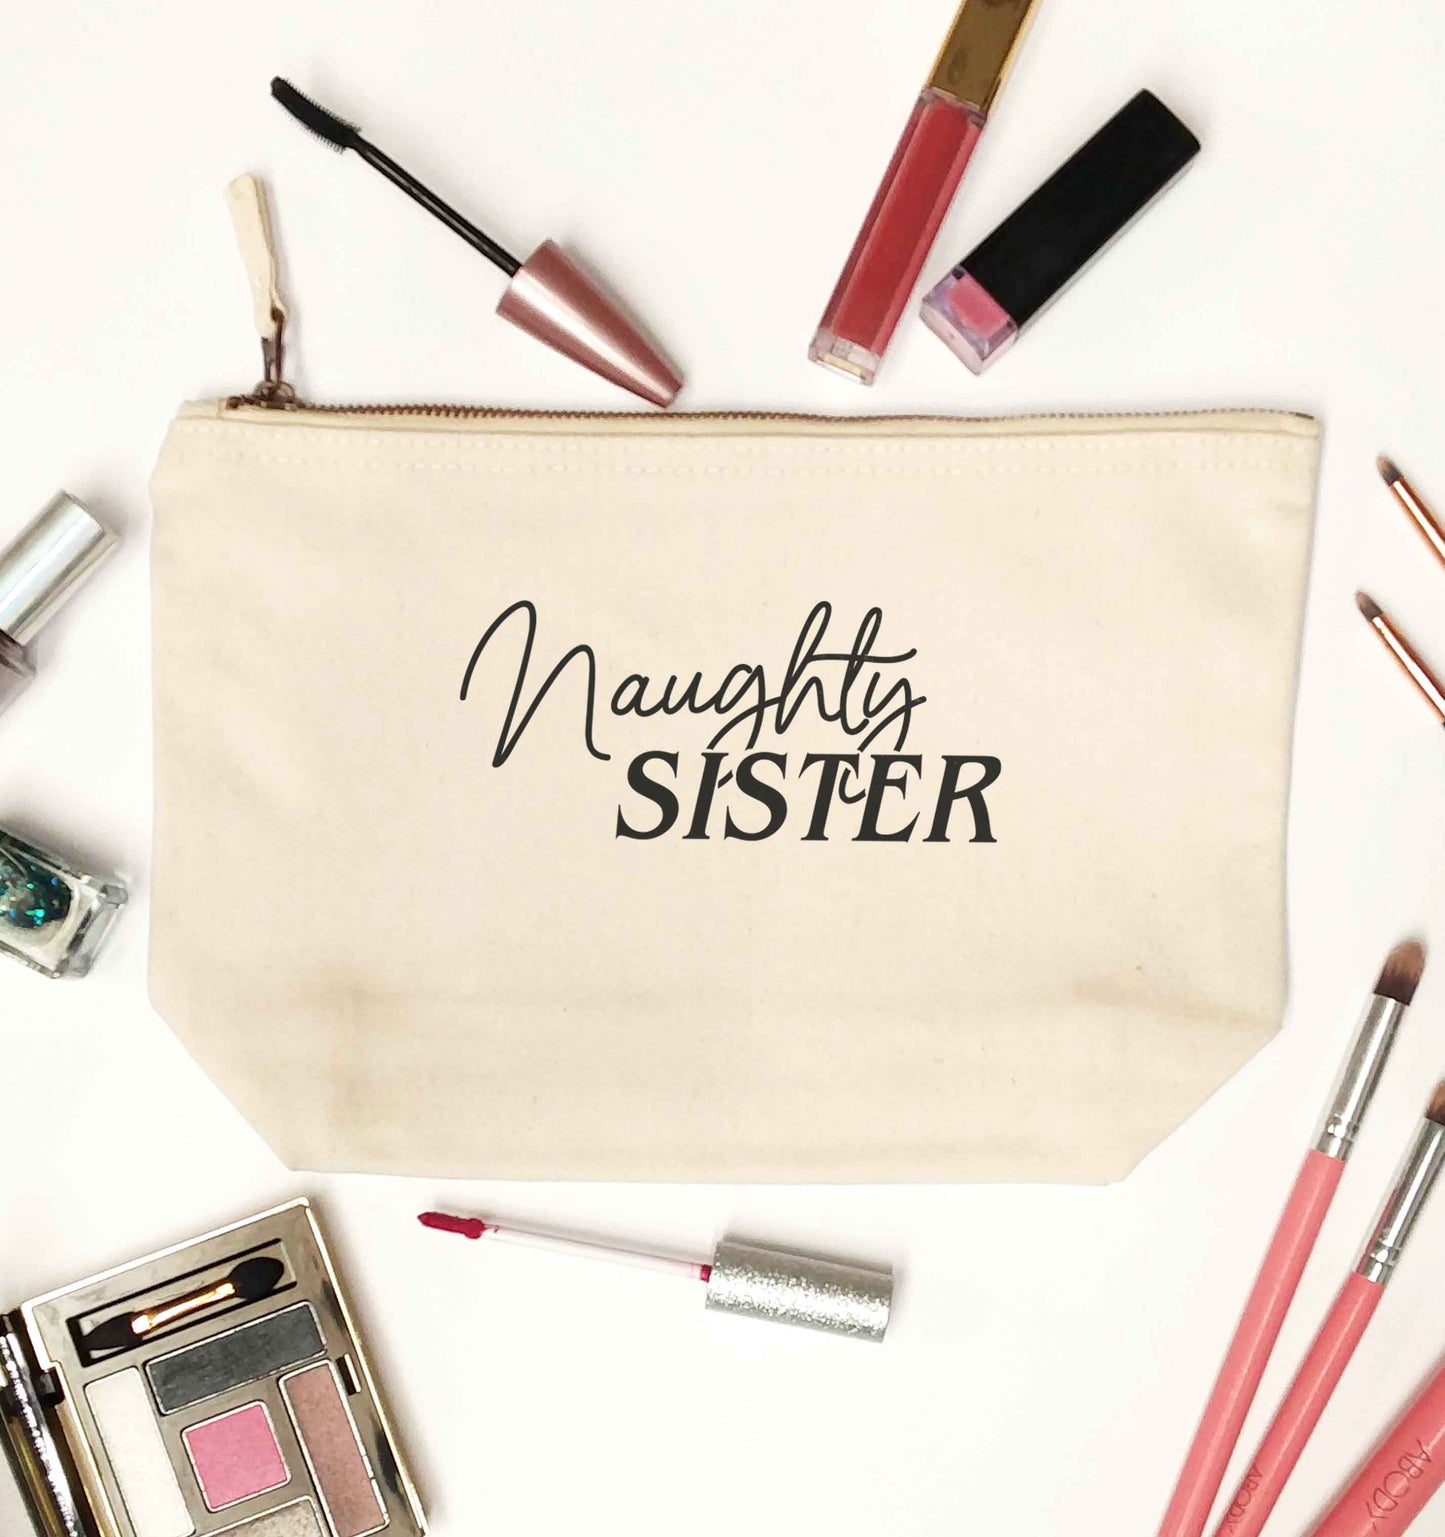 Naughty Sister natural makeup bag